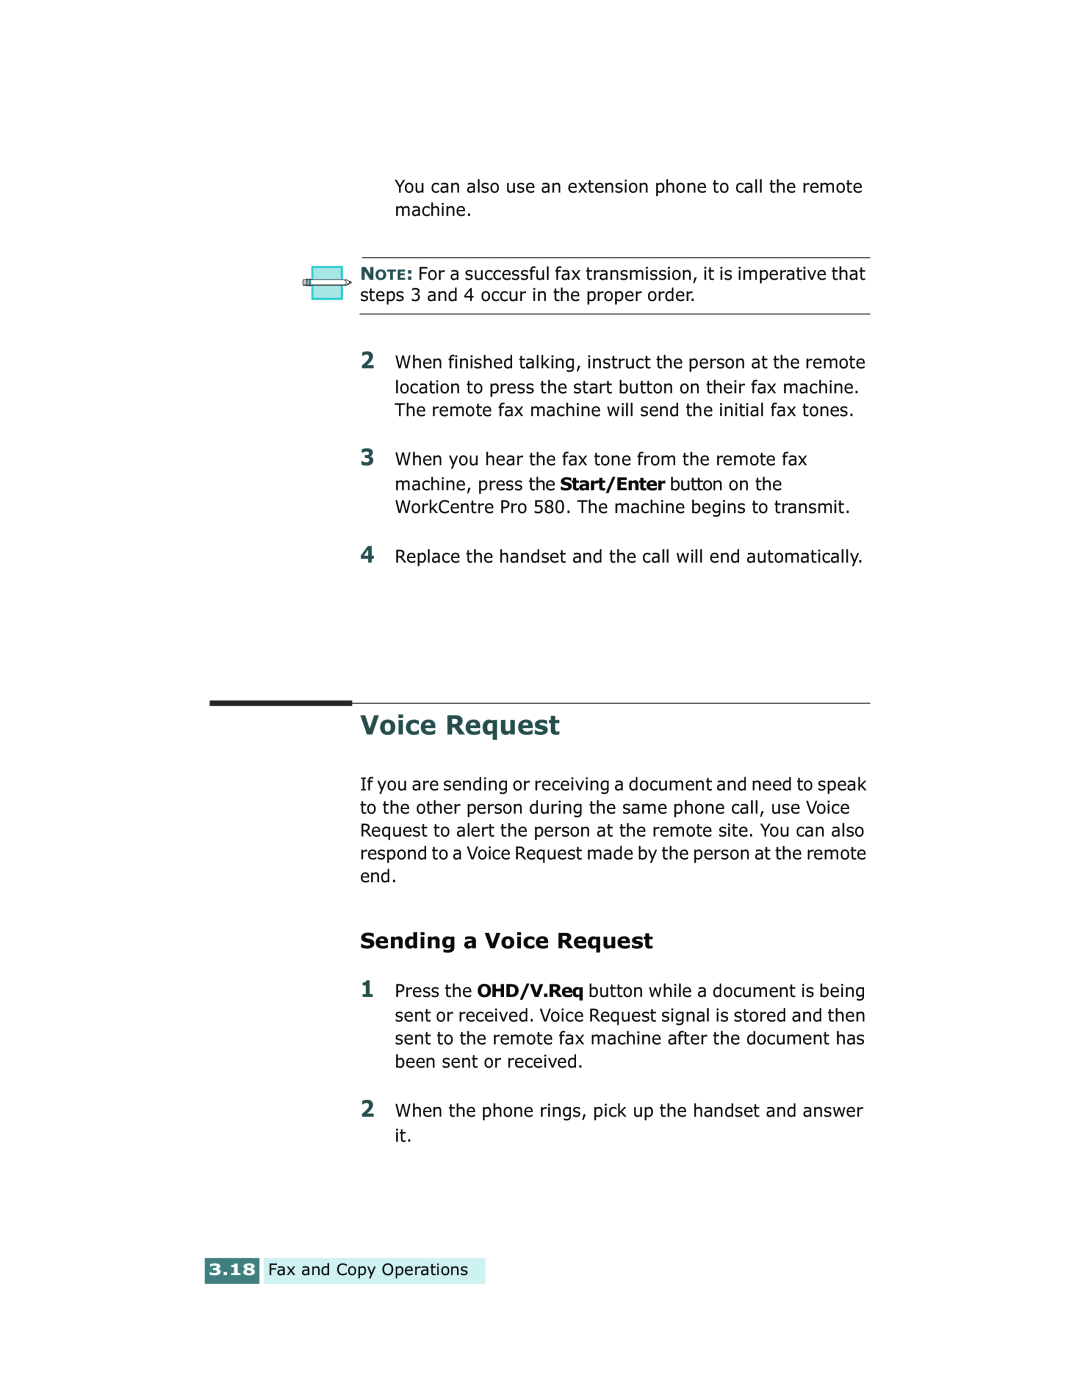 Xerox Pro 580 manual Sending a Voice Request 